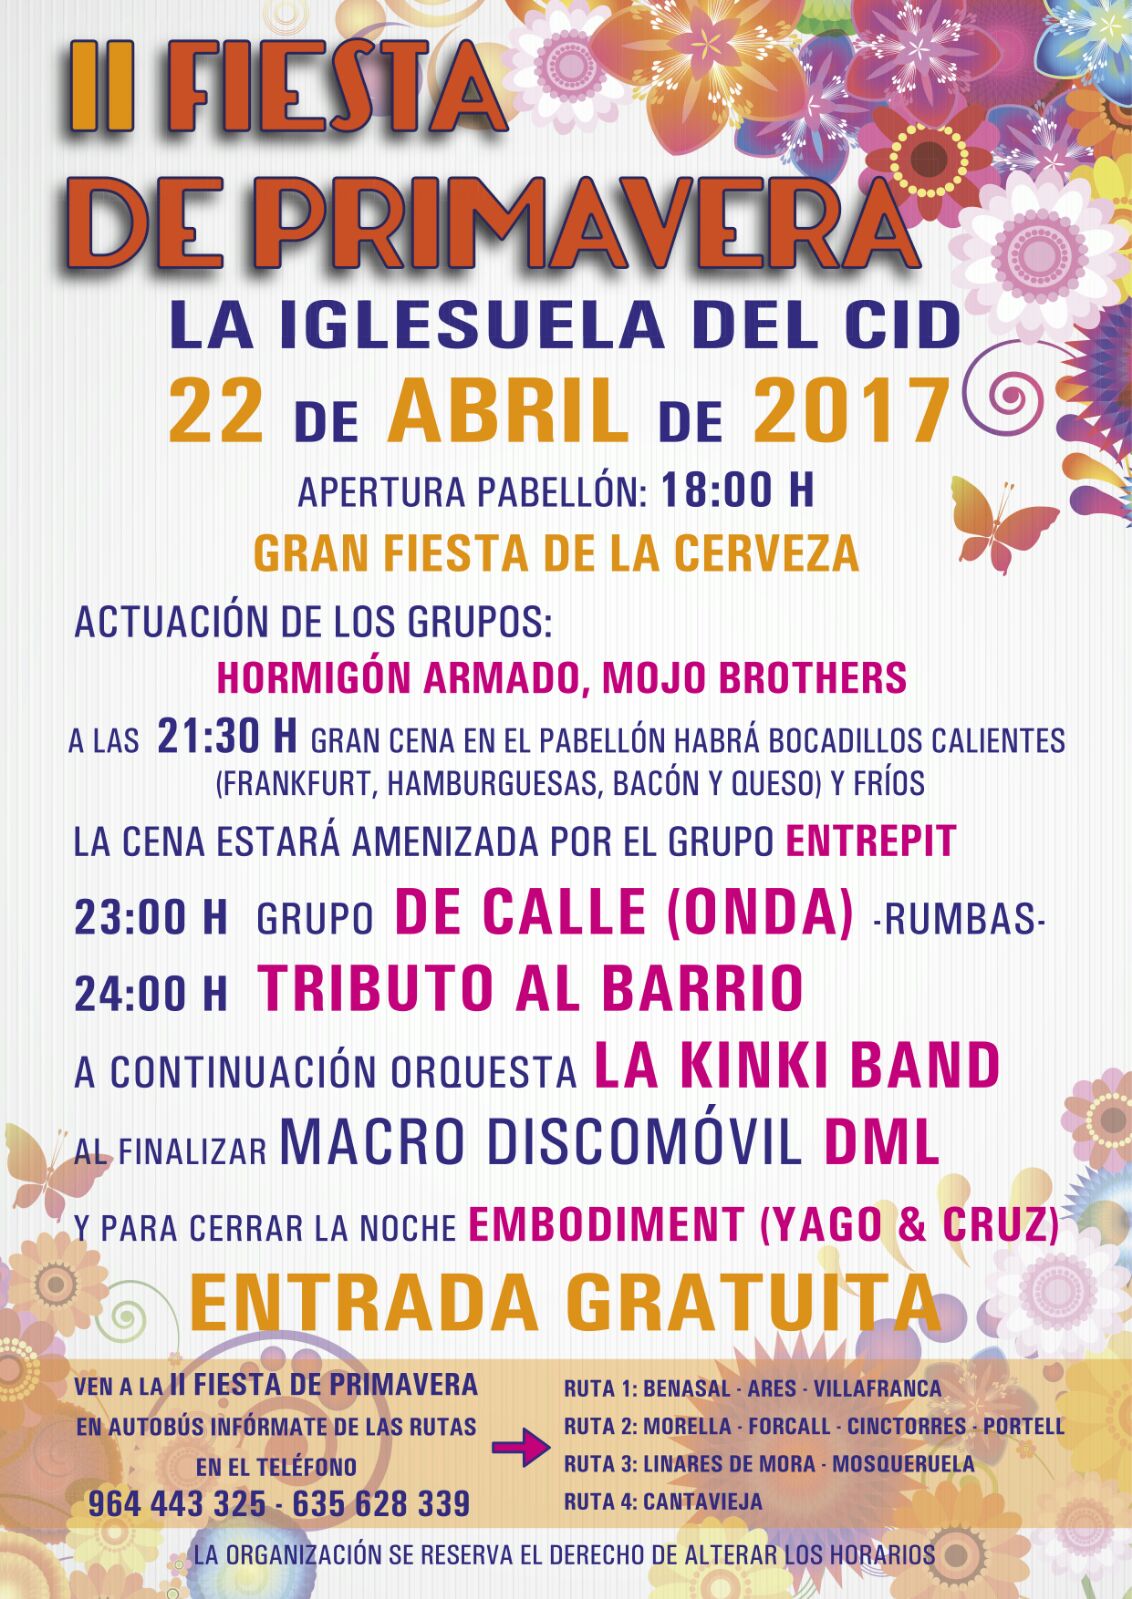 Fiesta primavera Iglesuela del Cid